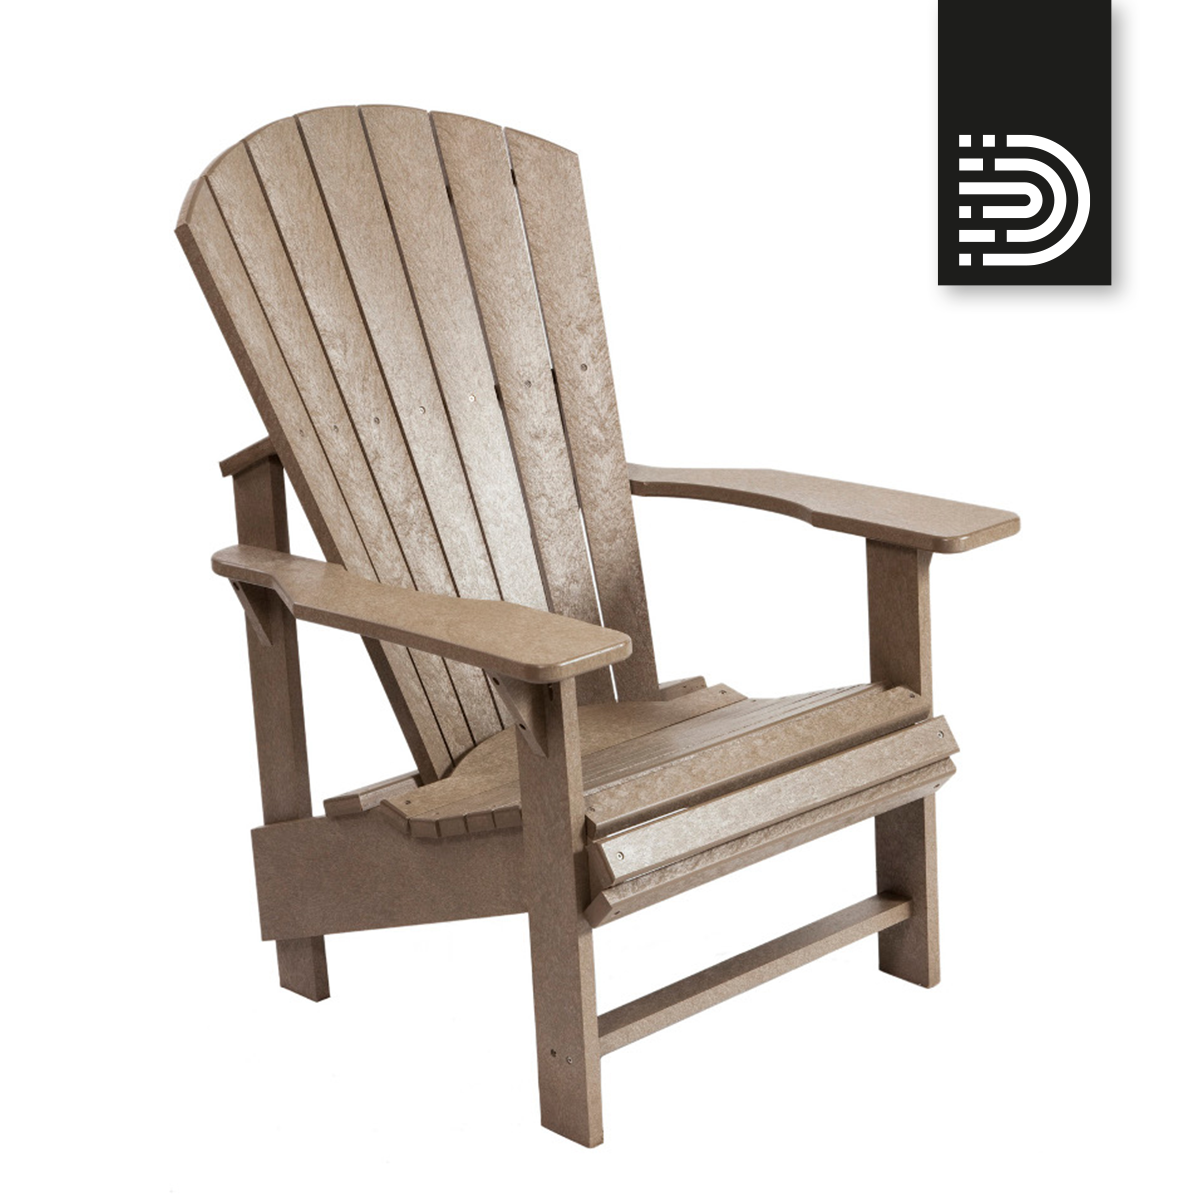 C03 Upright Adirondack Chair - beige 07